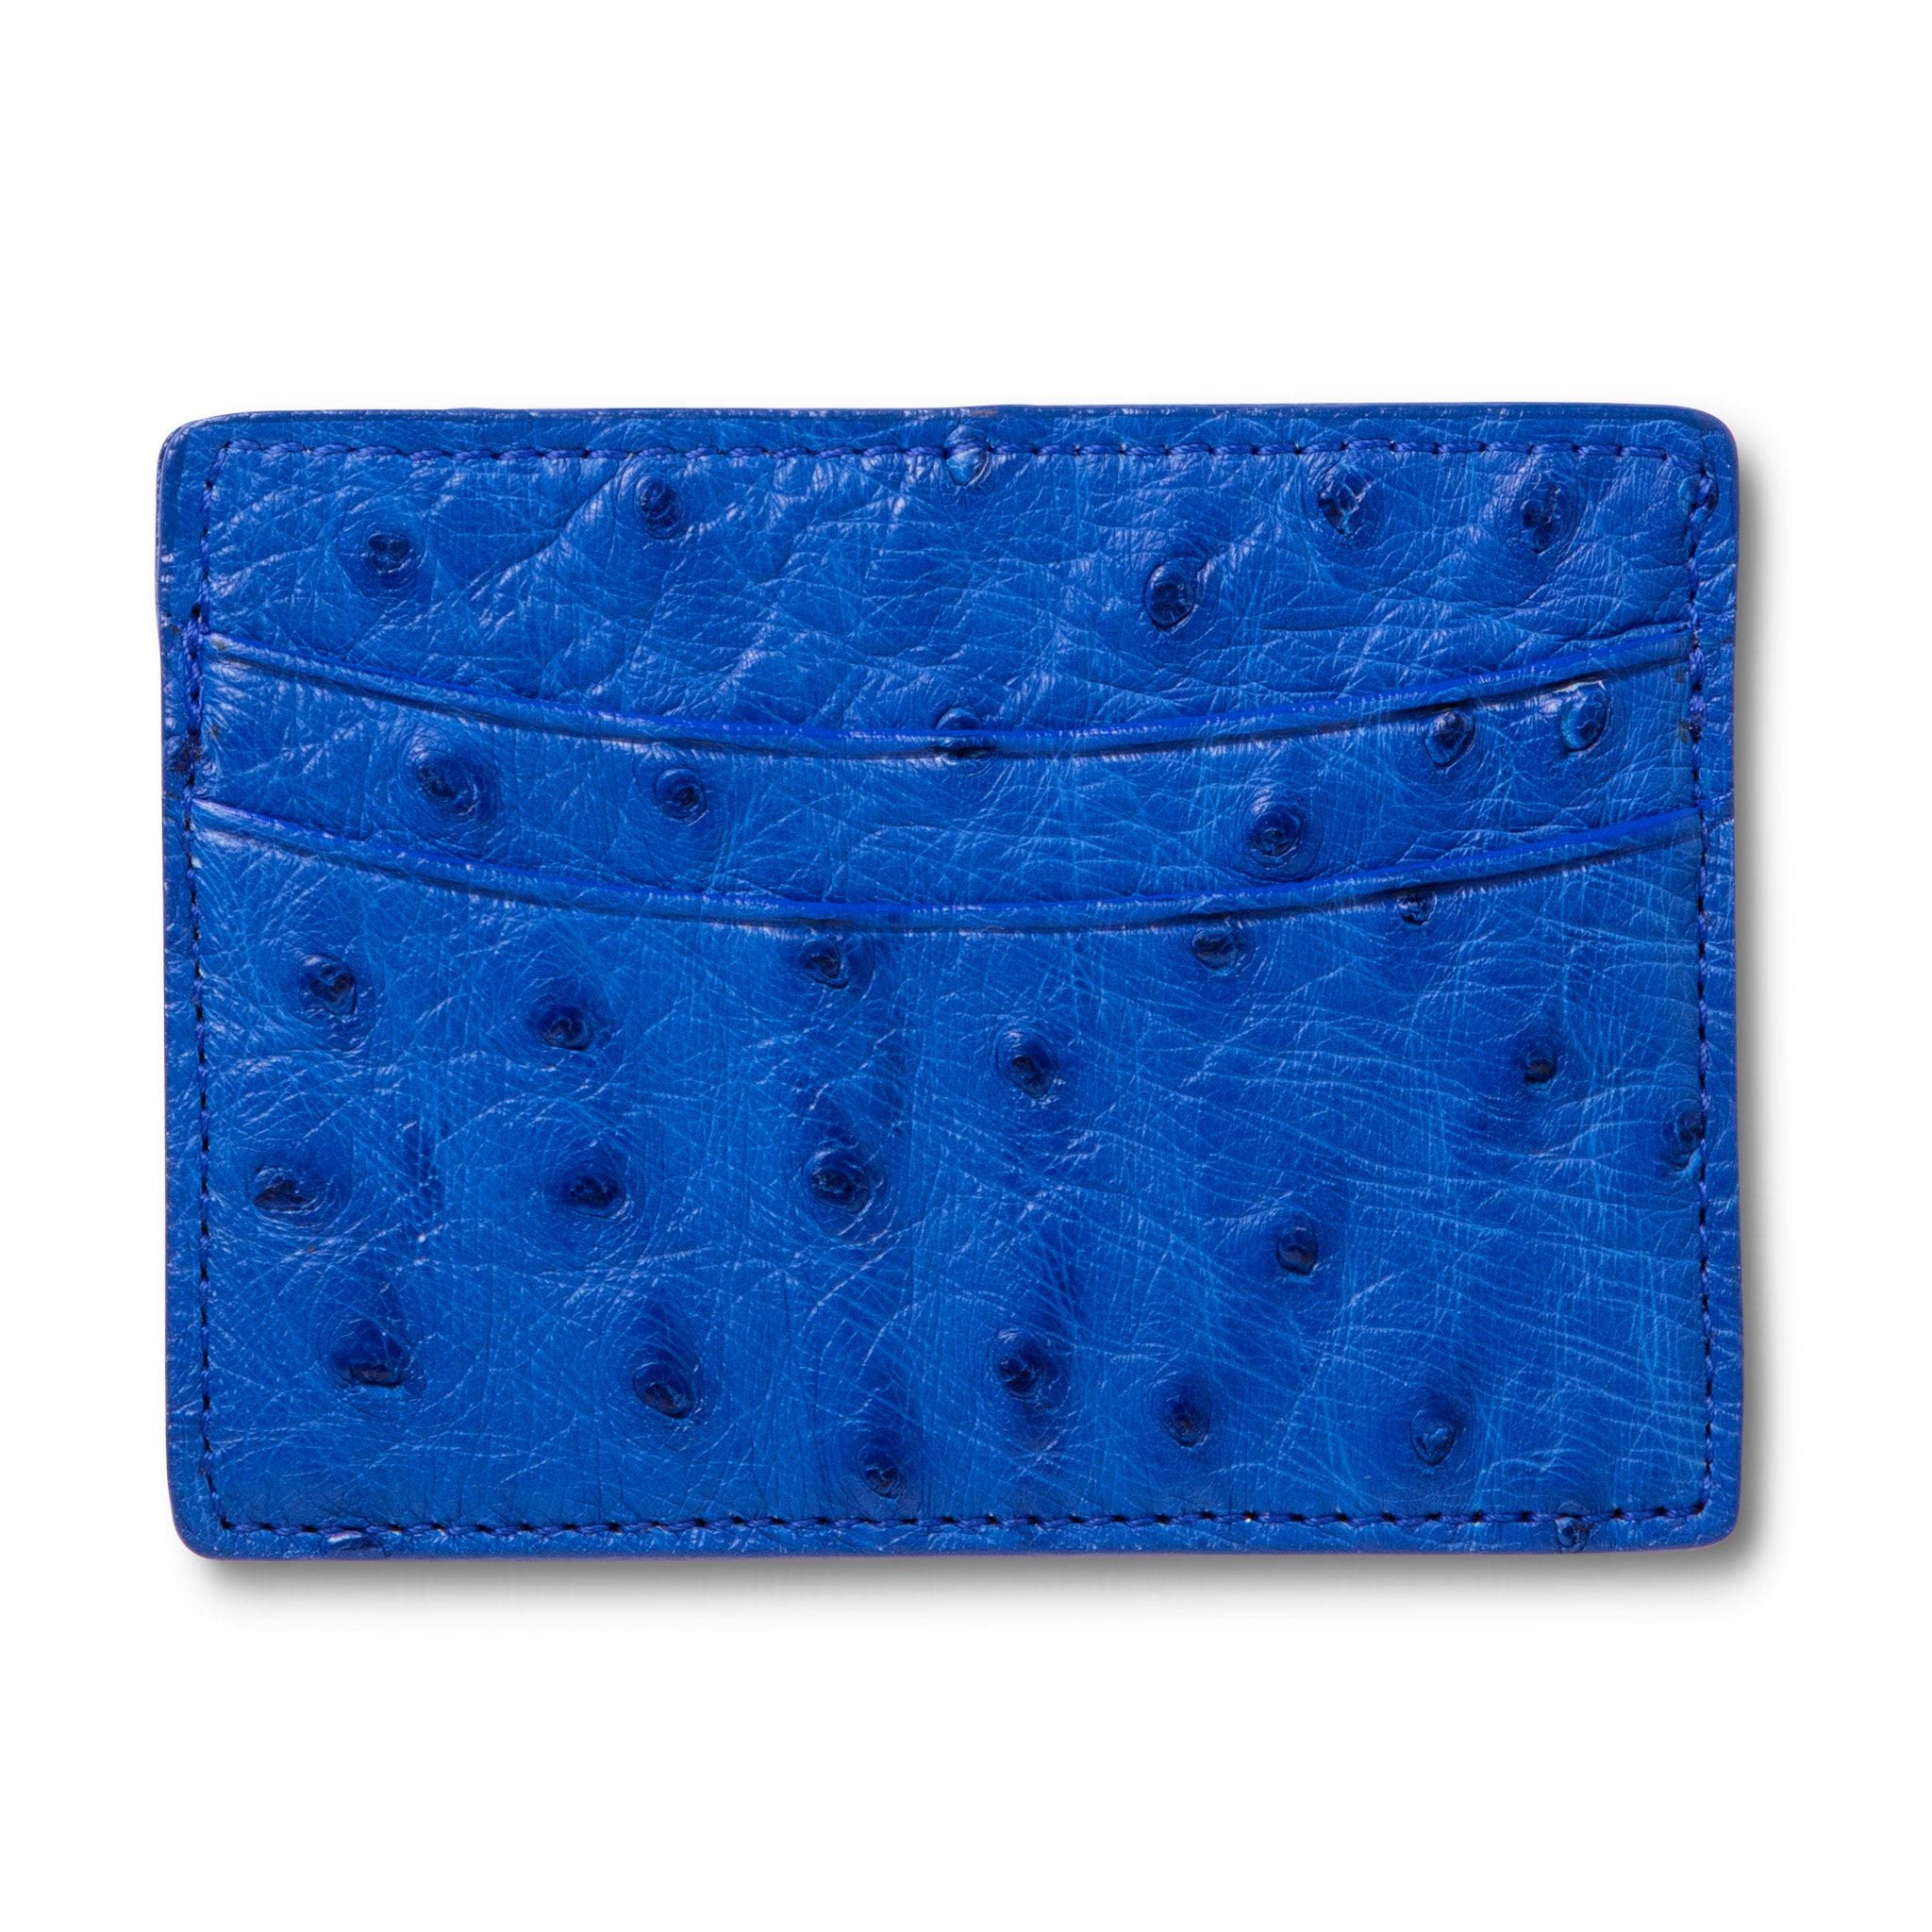 CARD HOLDER OSTRICH - Ostrich leather credit card holder, handmade in France